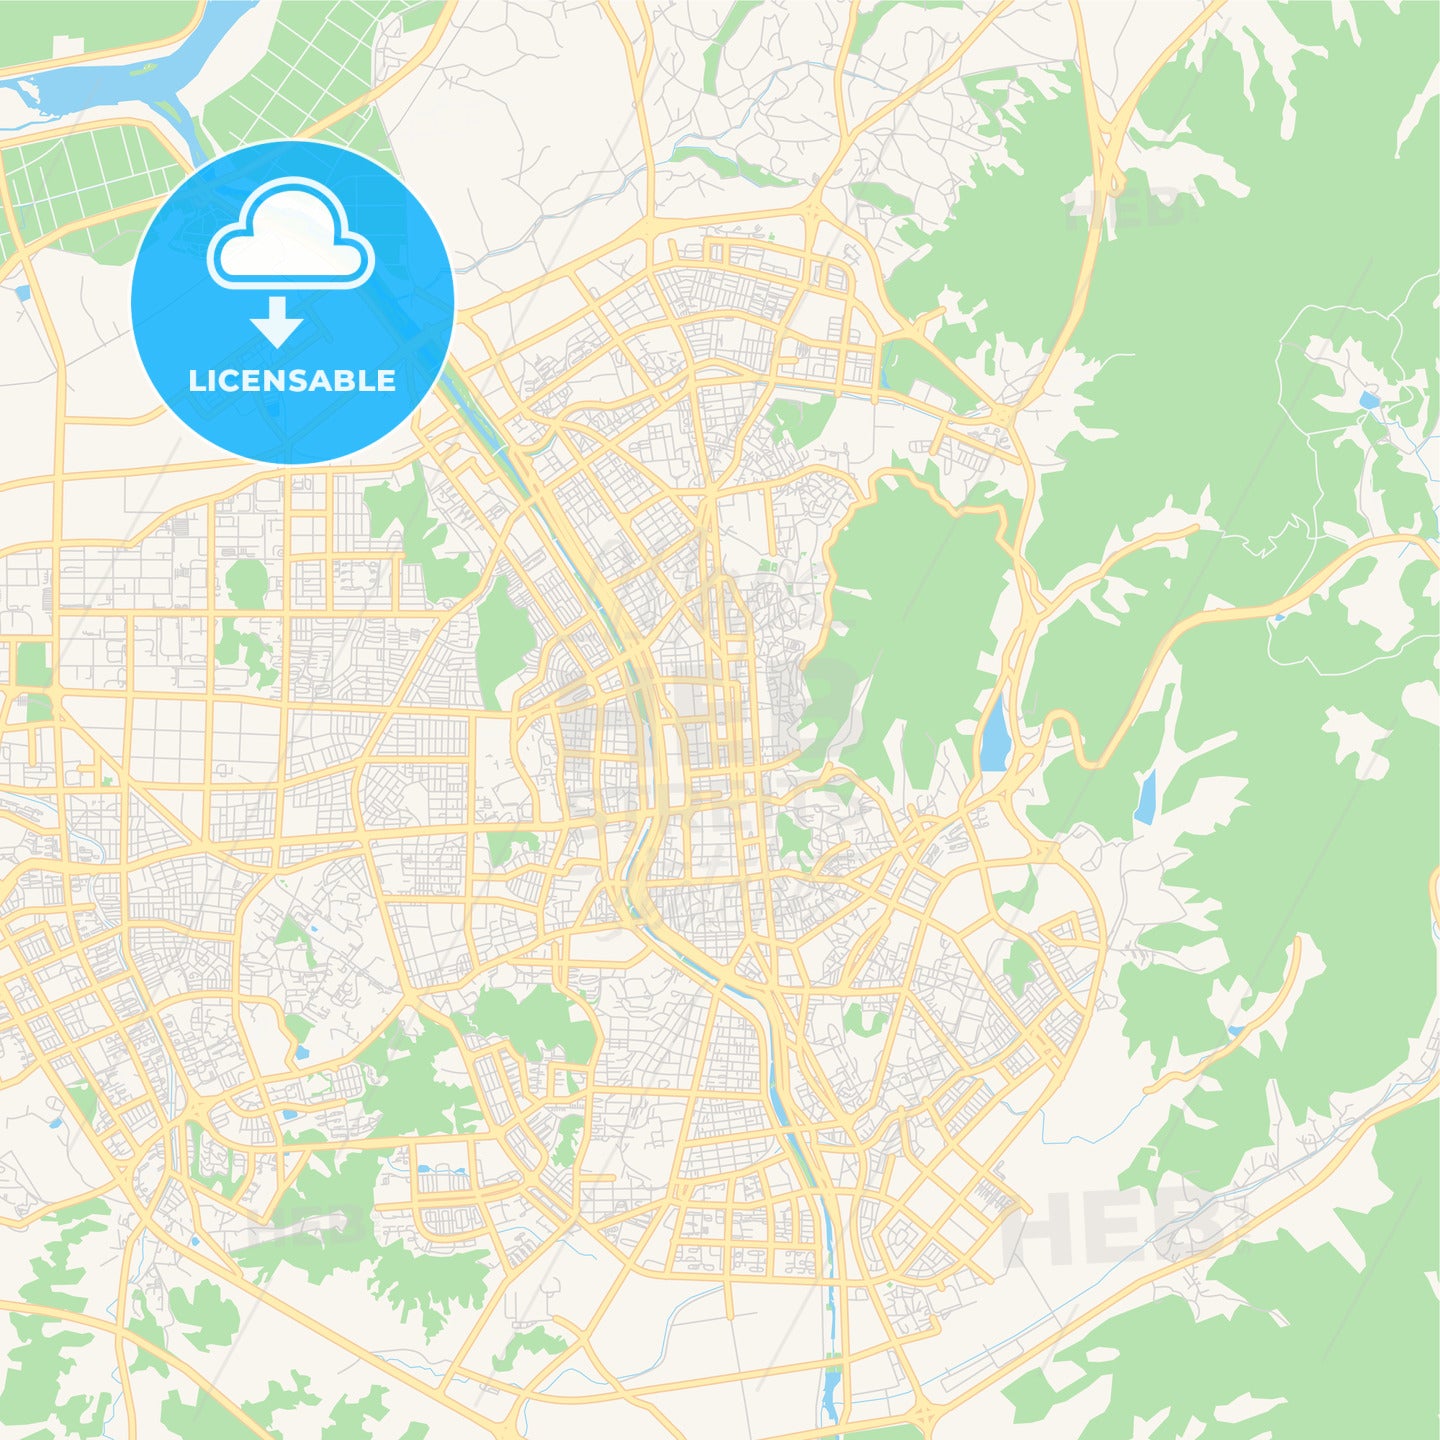 Printable street map of Cheongju, South Korea